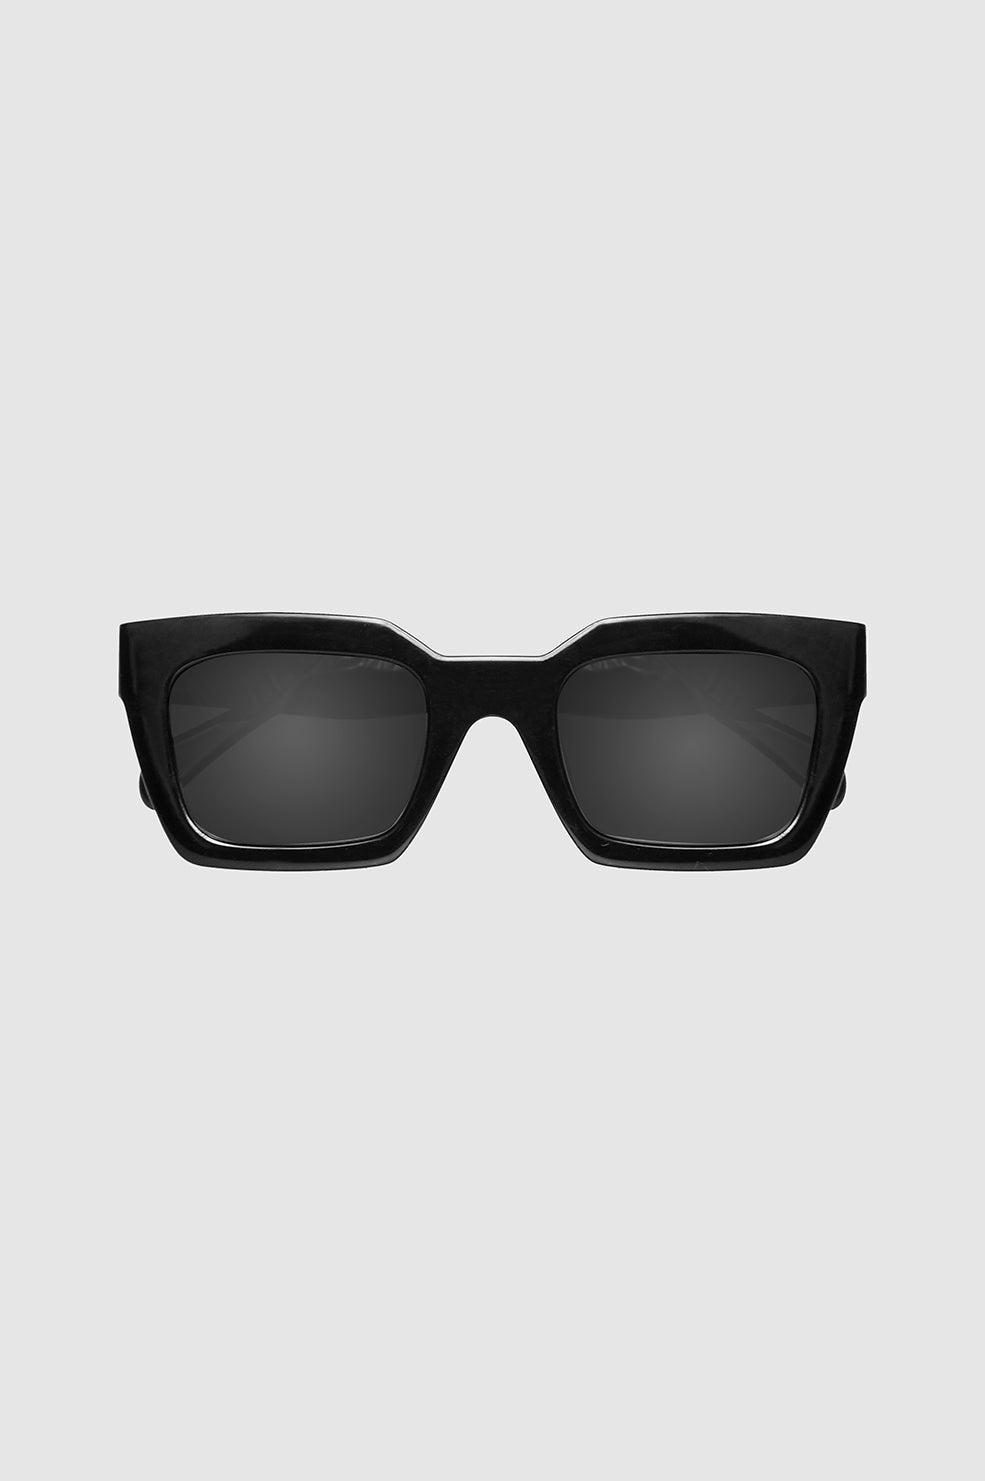 ANINE BING Indio Sunglasses - Black - Front View